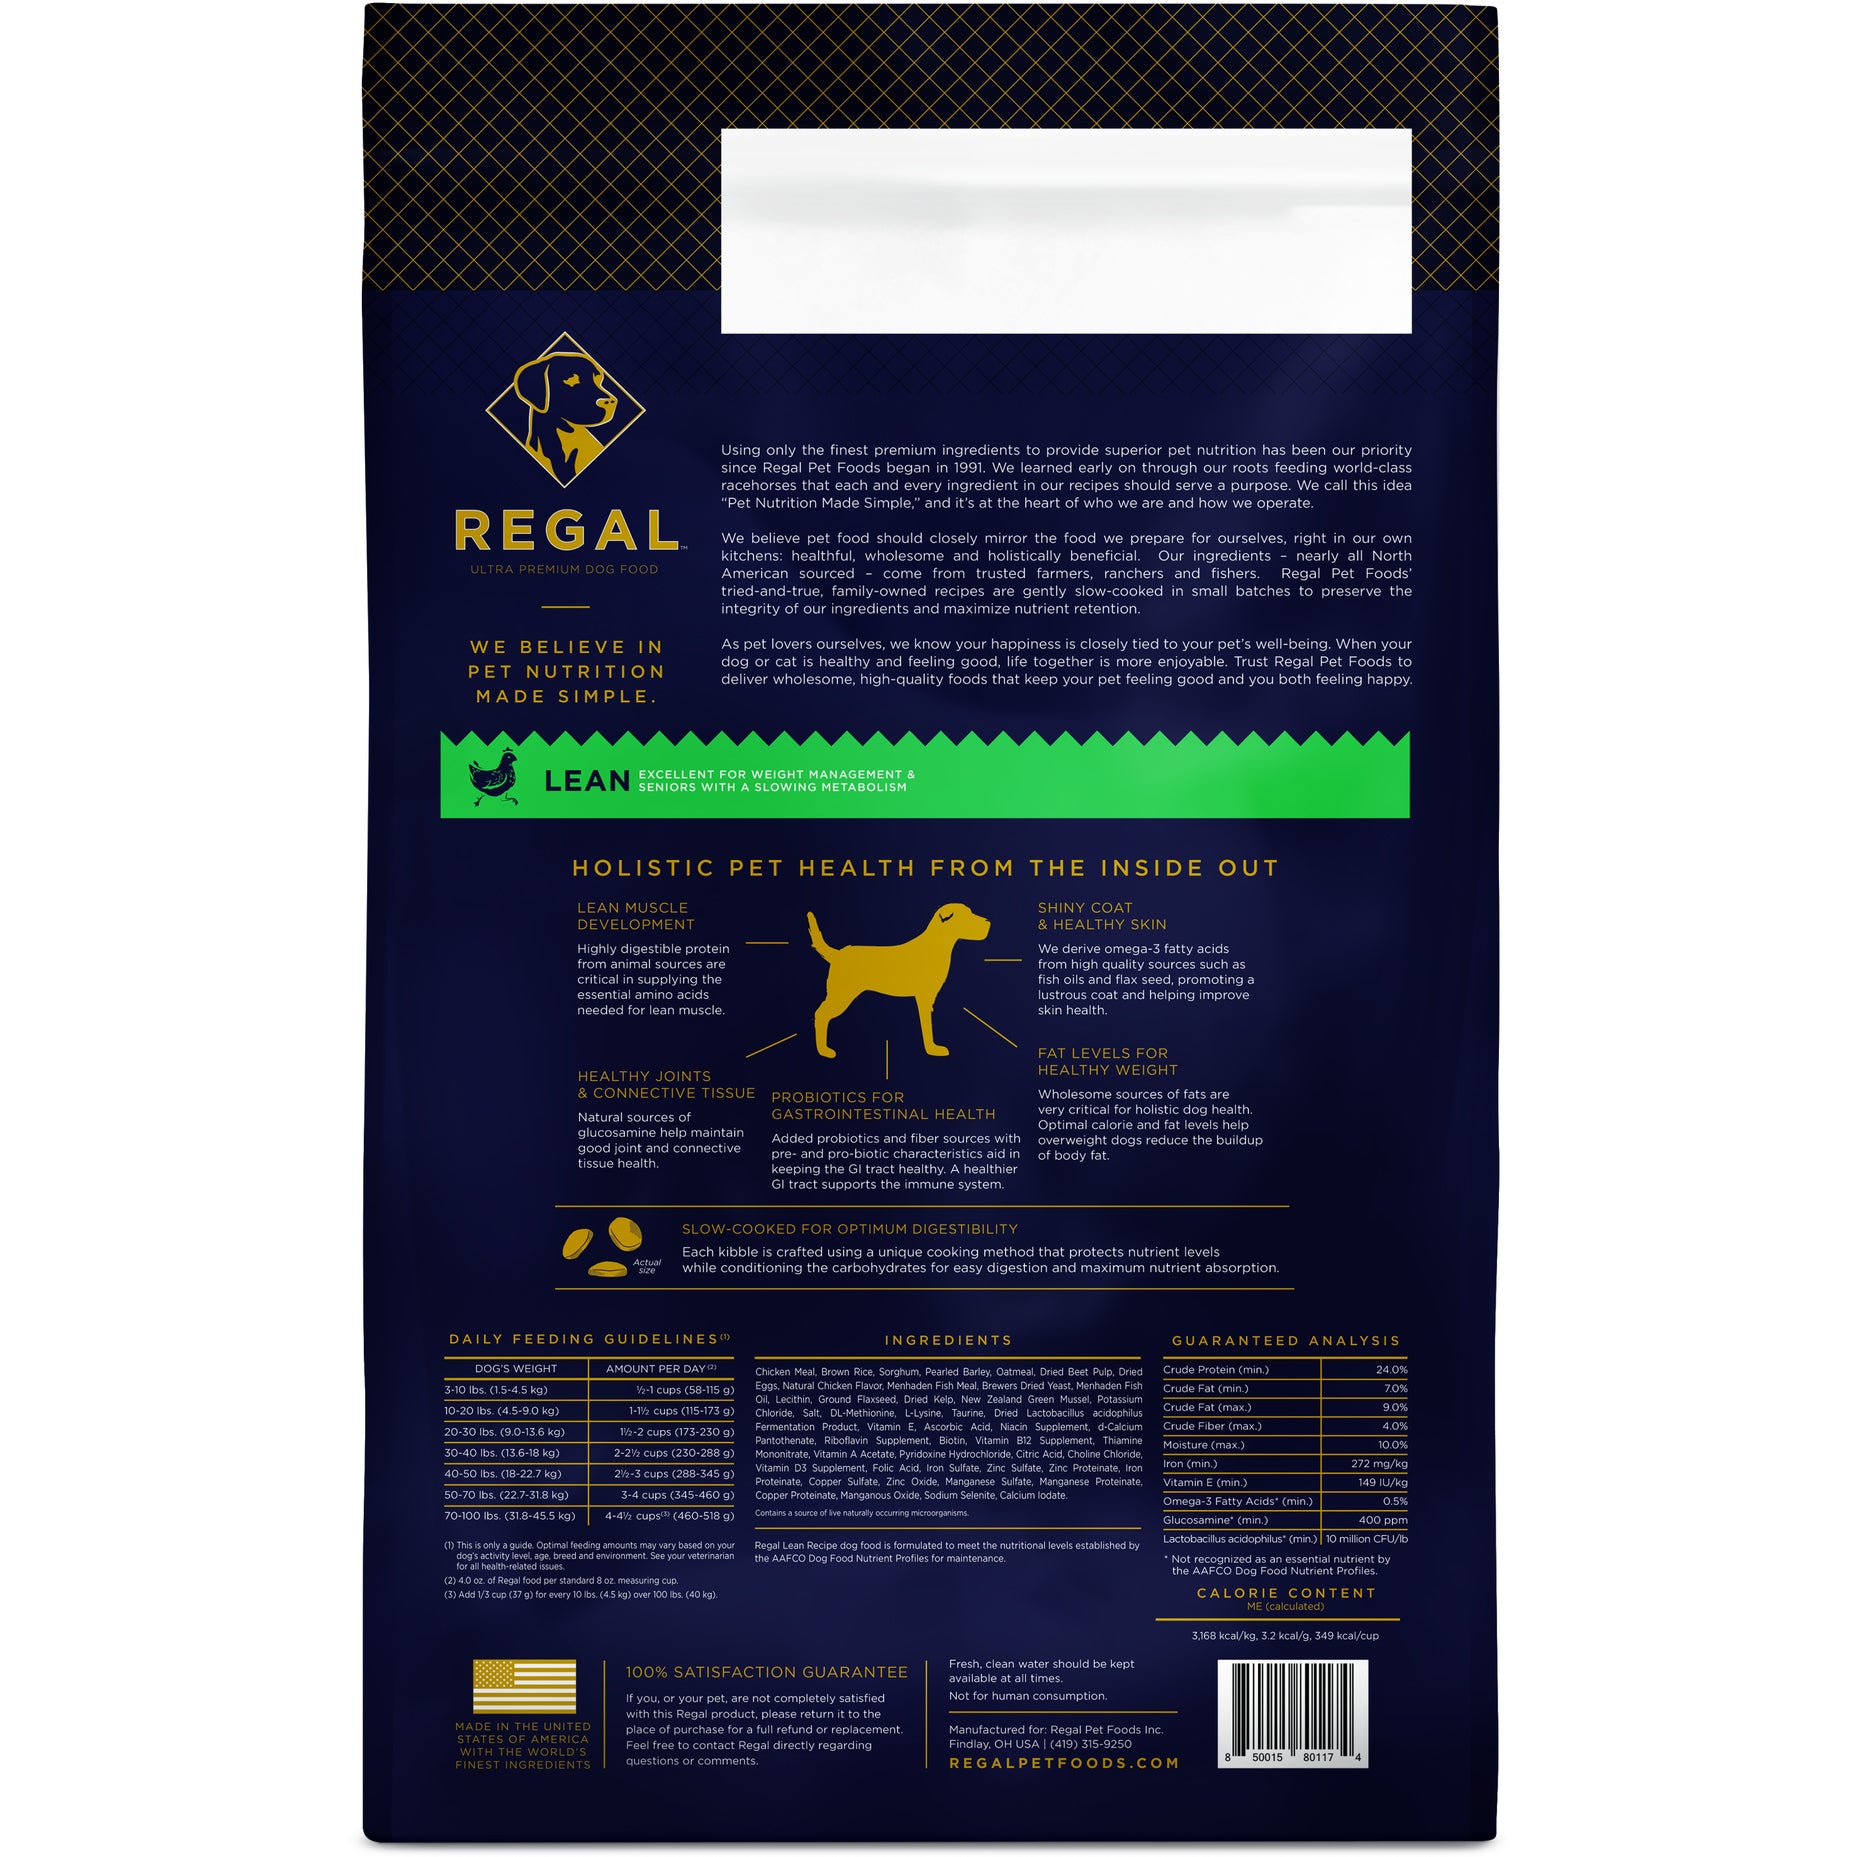 Regal Lean Recipe Dry Dog Food